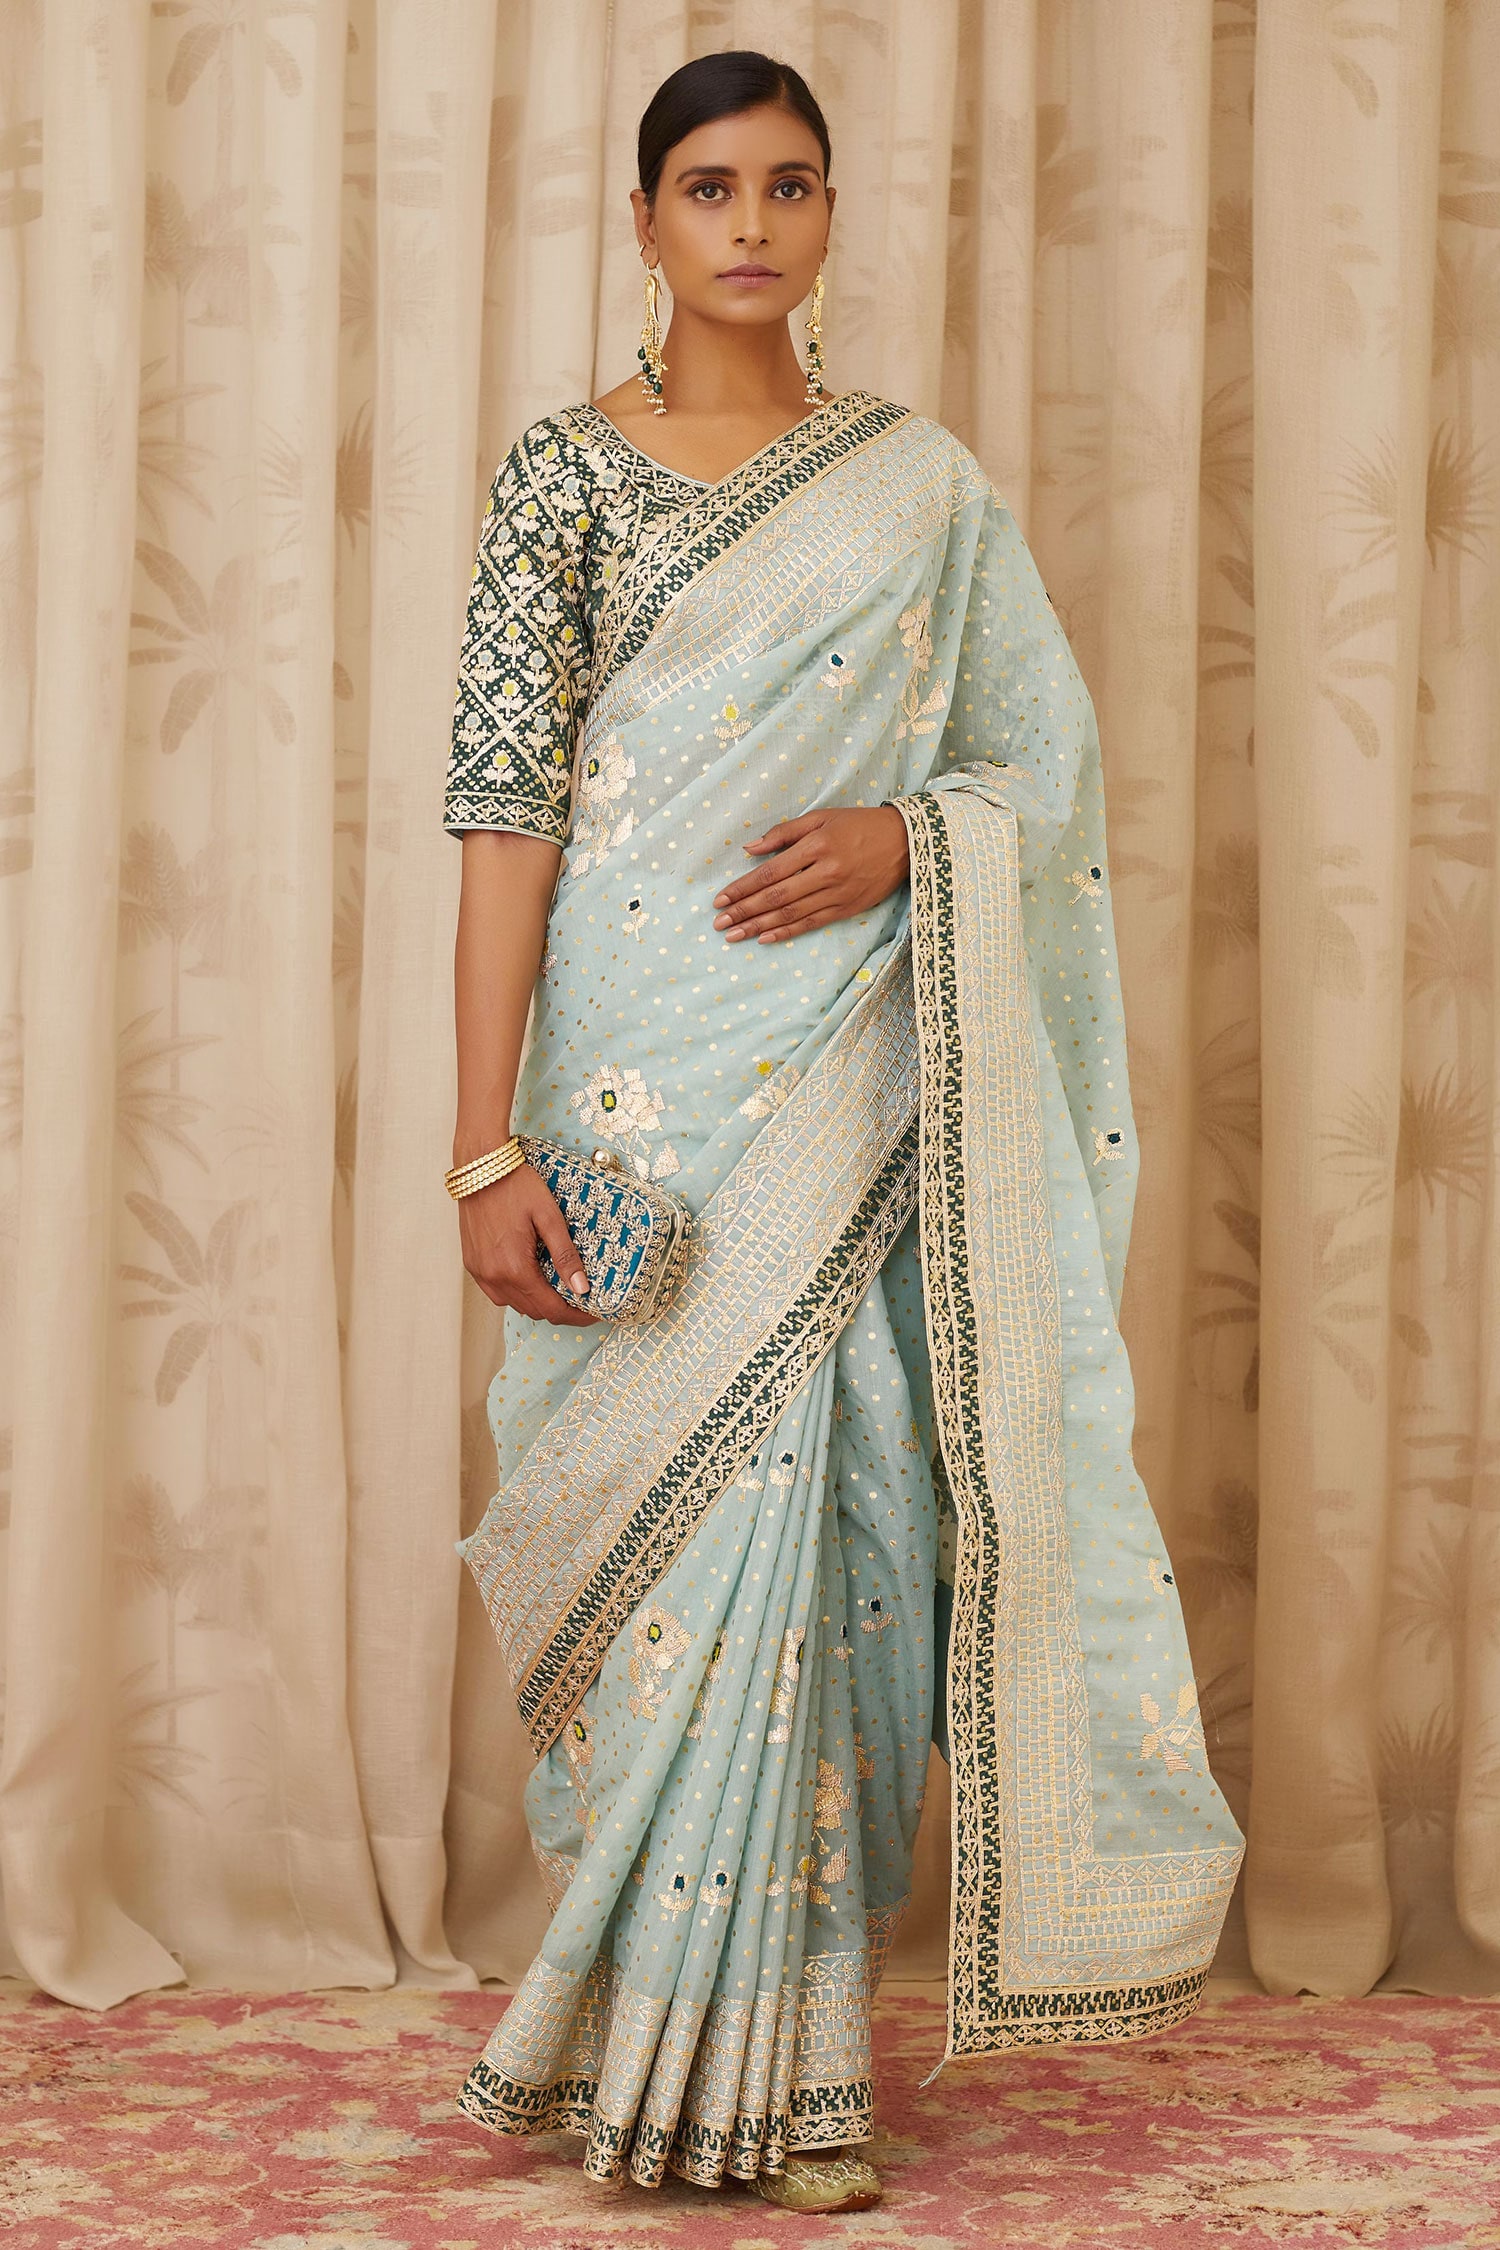 Light blue color designer saree with silver ssequin work | Saree designs,  Designer evening dresses, Ladies dress design